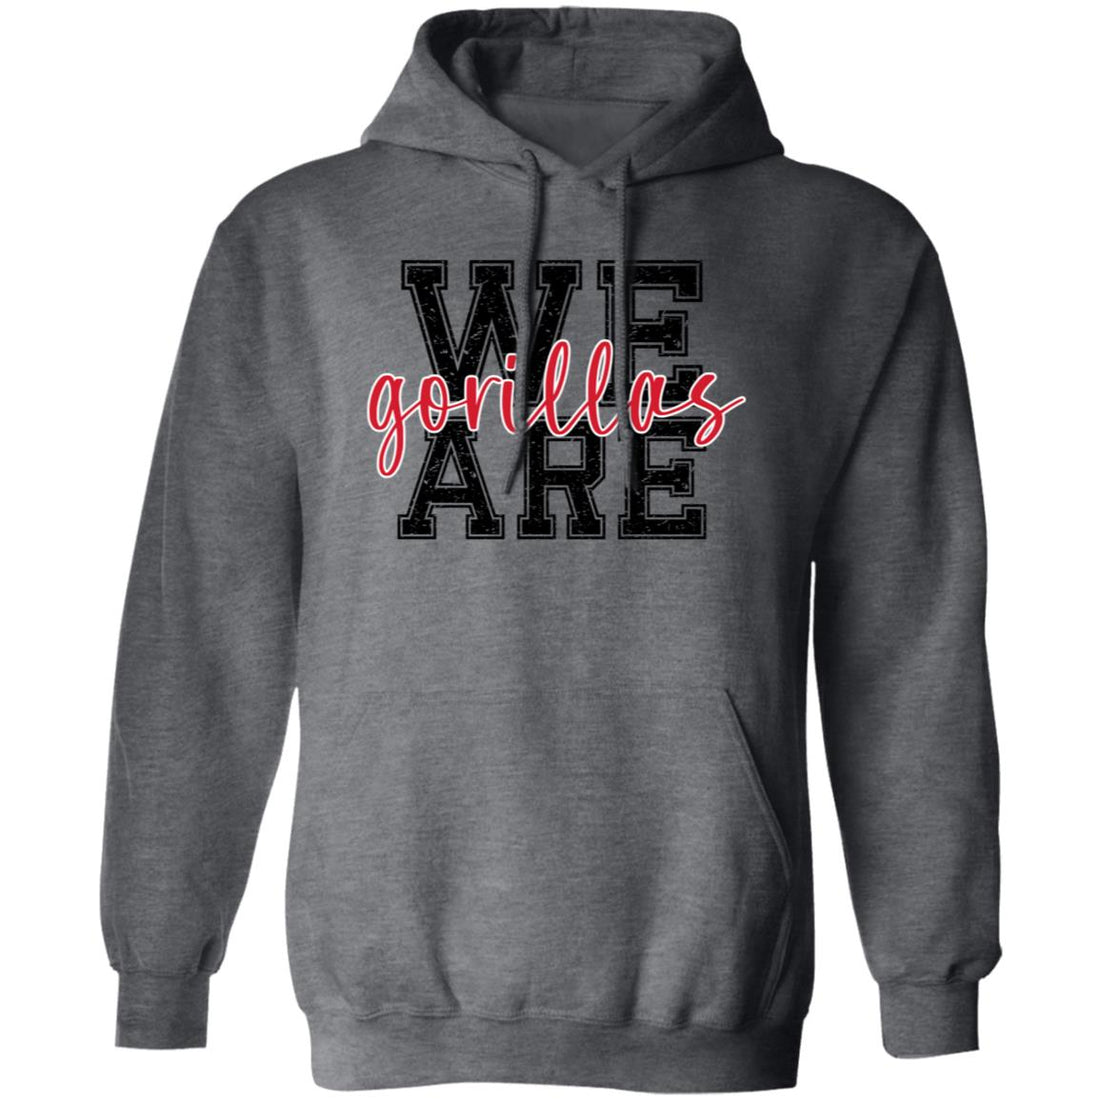 We Are Gorillas Pullover Hoodie - Sweatshirts - Positively Sassy - We Are Gorillas Pullover Hoodie